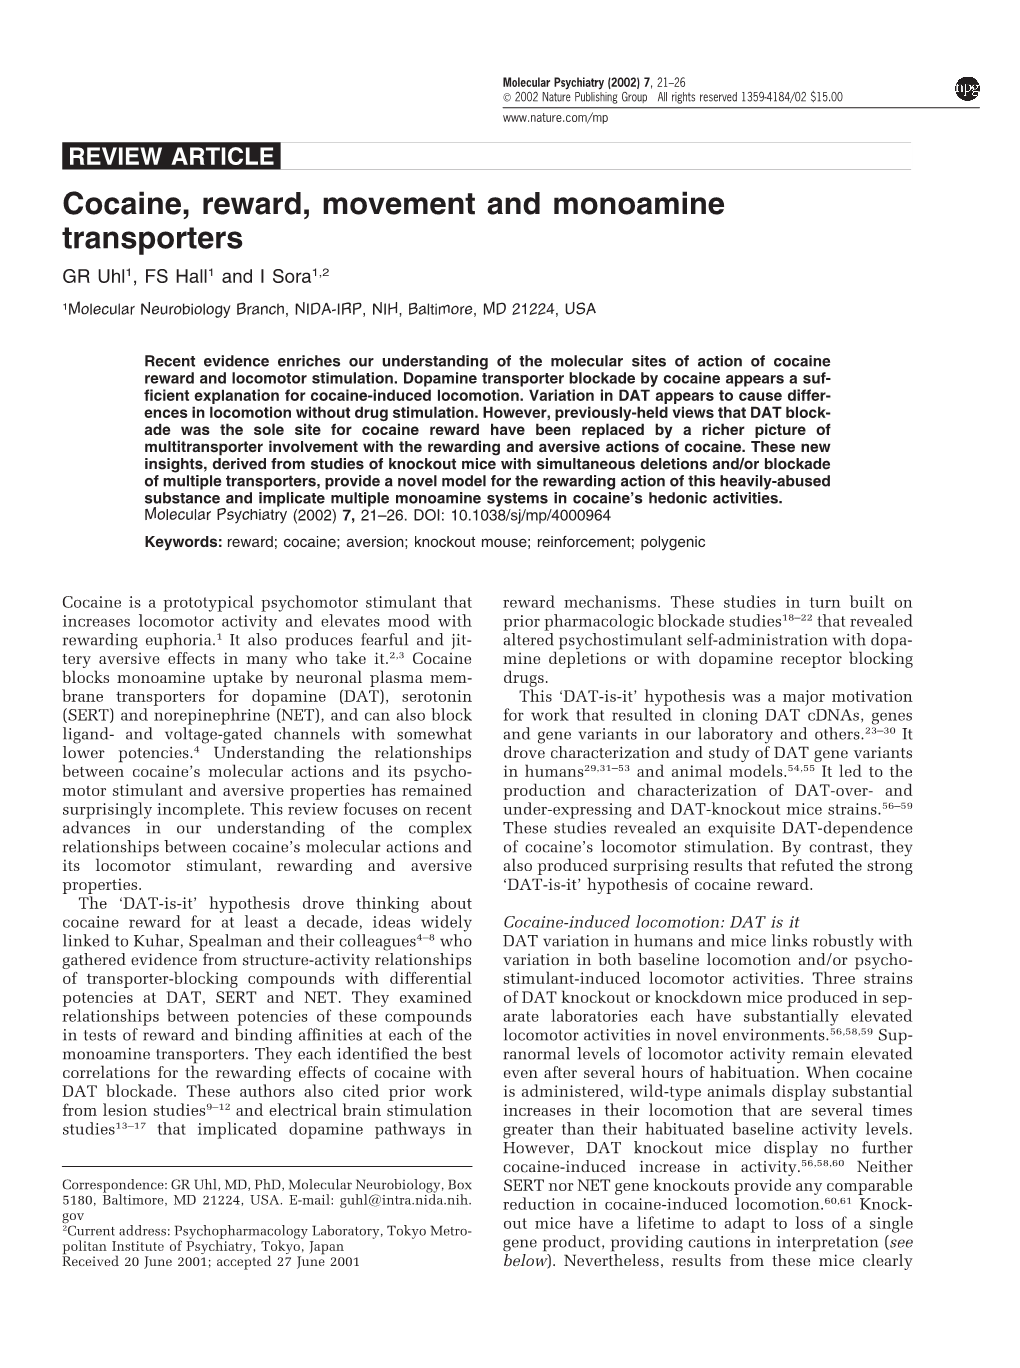 Cocaine, Reward, Movement and Monoamine Transporters GR Uhl1, FS Hall1 and I Sora1,2